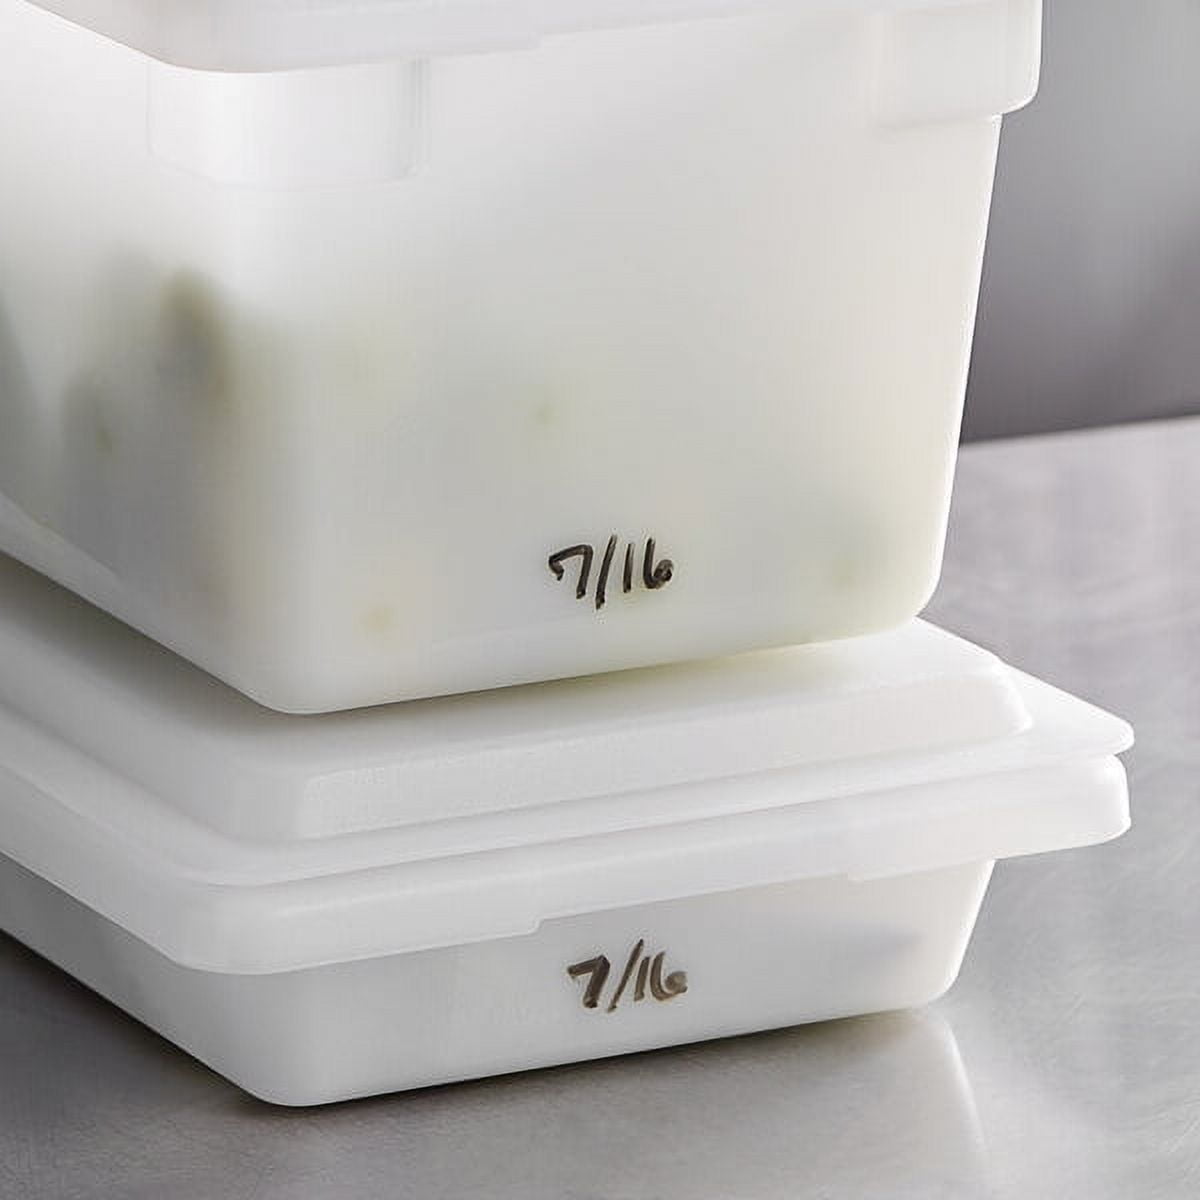 Vigor 26 x 18 x 12 White Polyethylene Food Storage Box